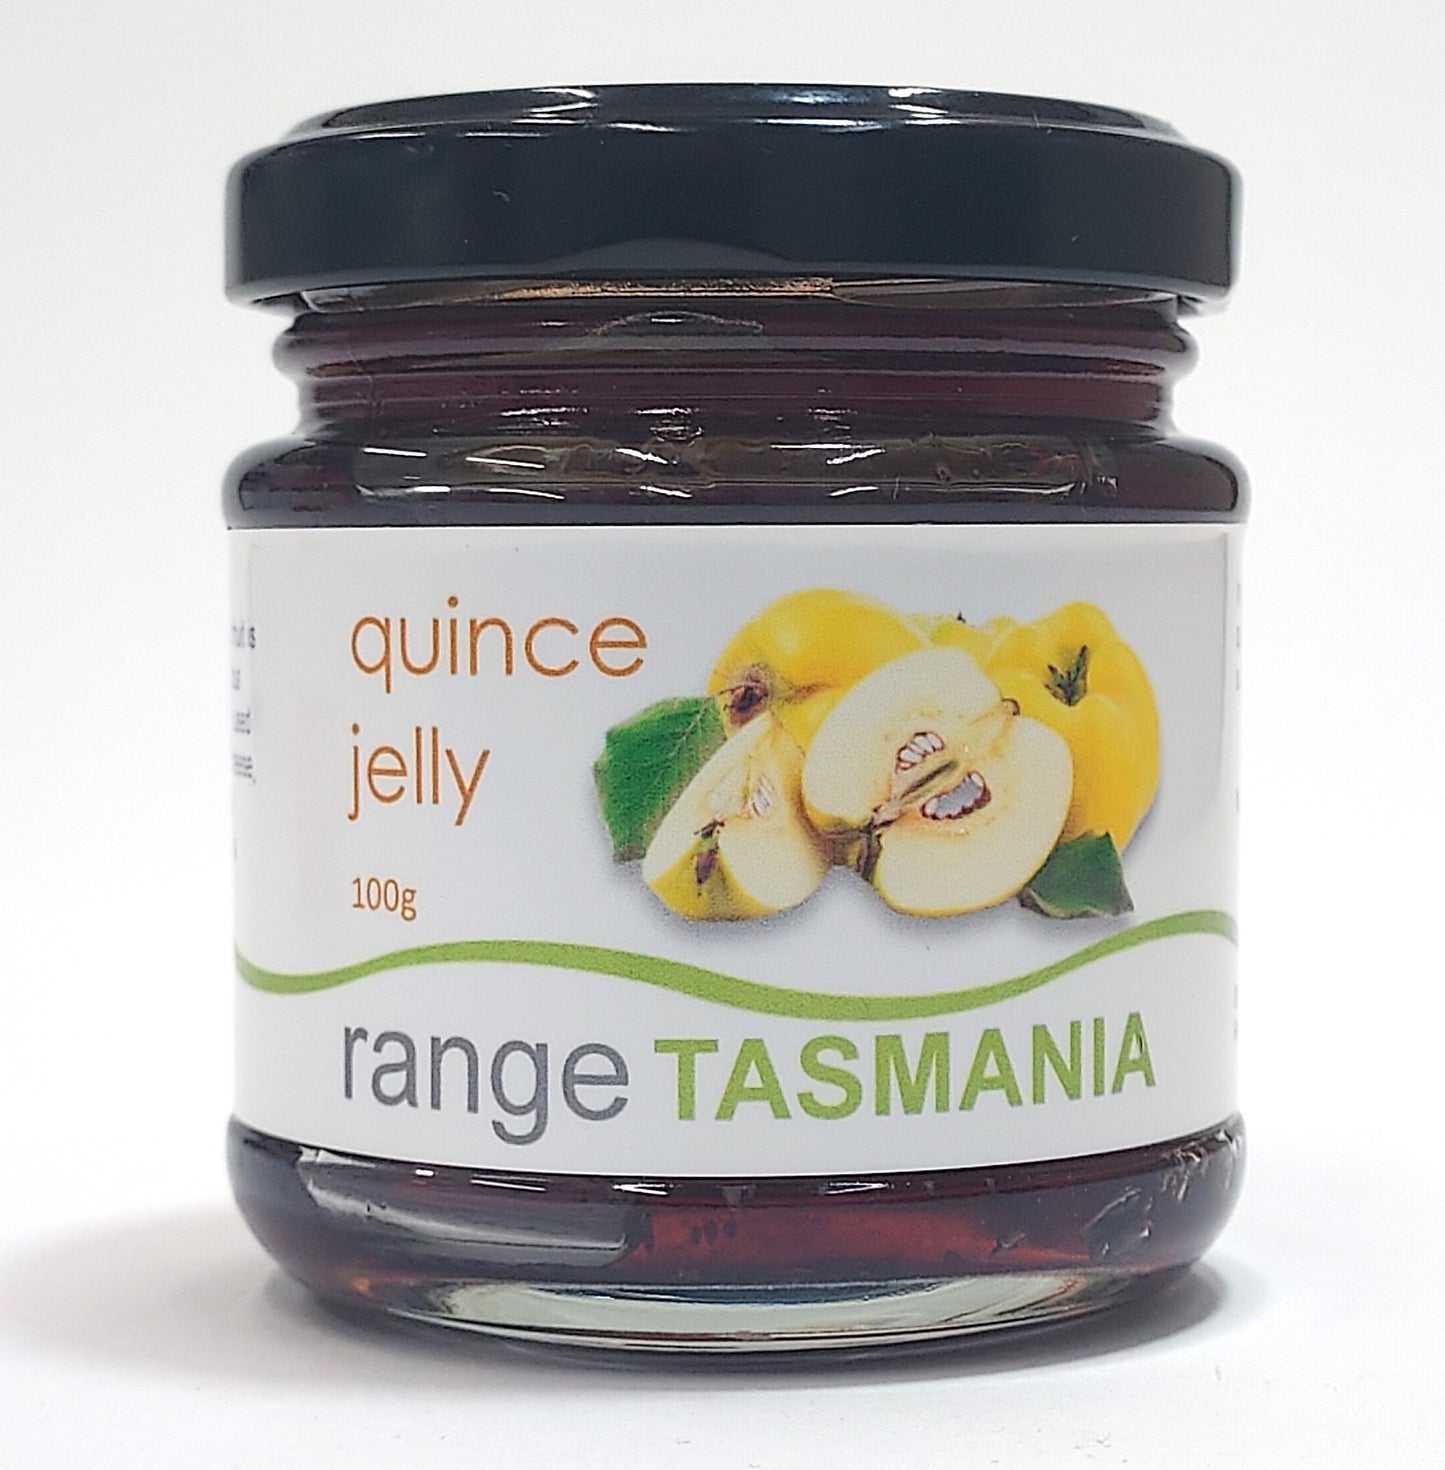 a 100 gram jar of range Tasmania quince jelly